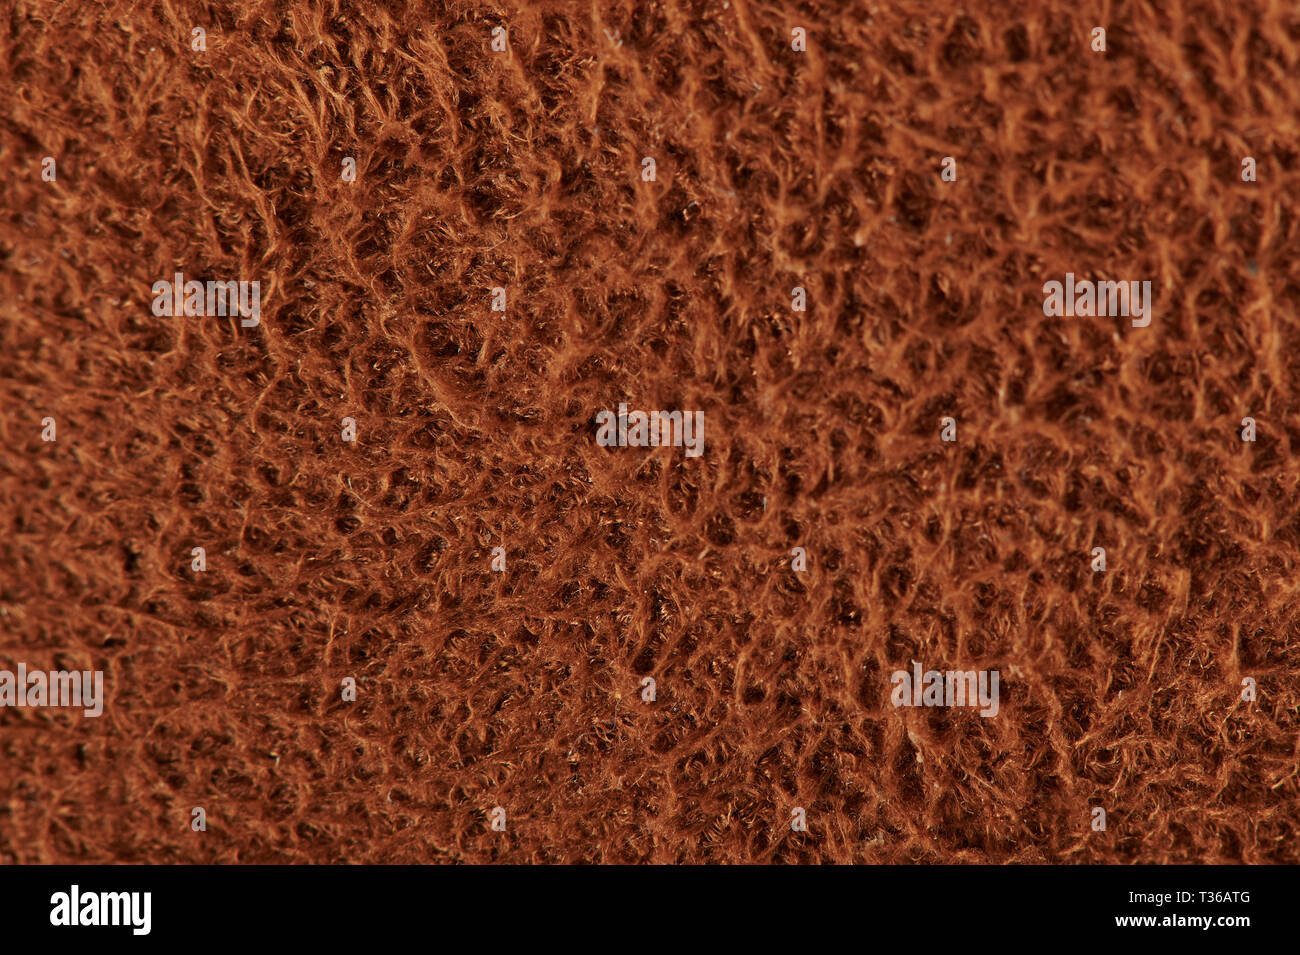 Brown laine moelleuse texture background close up view Banque D'Images